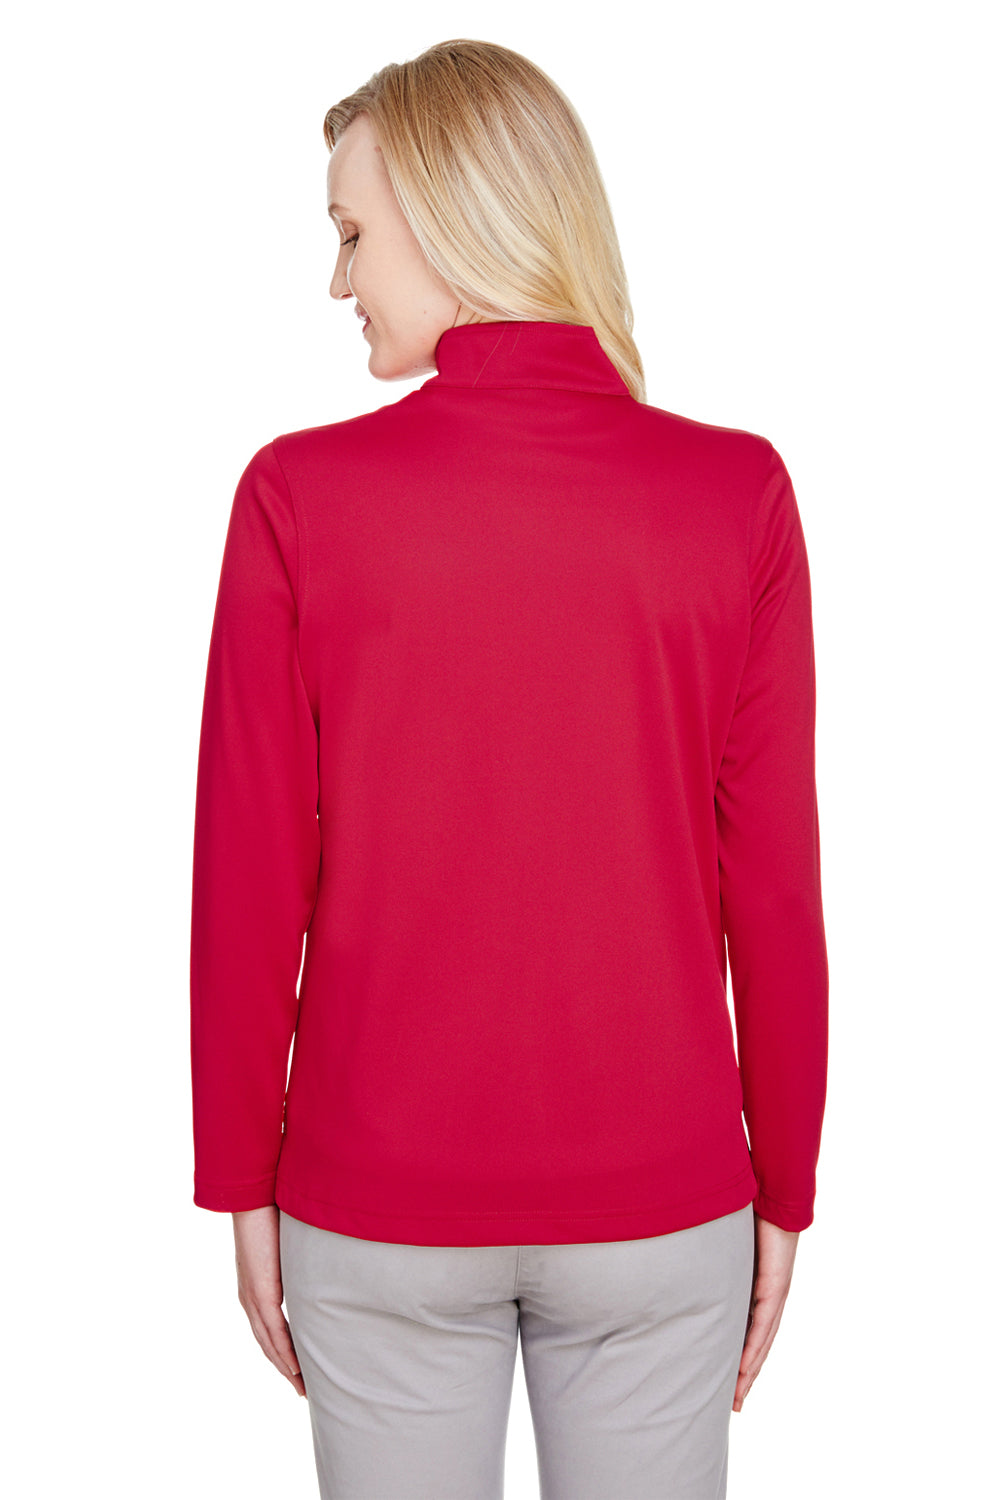 Harriton M748W Womens Advantage Performance Moisture Wicking 1/4 Zip Sweatshirt Red Back